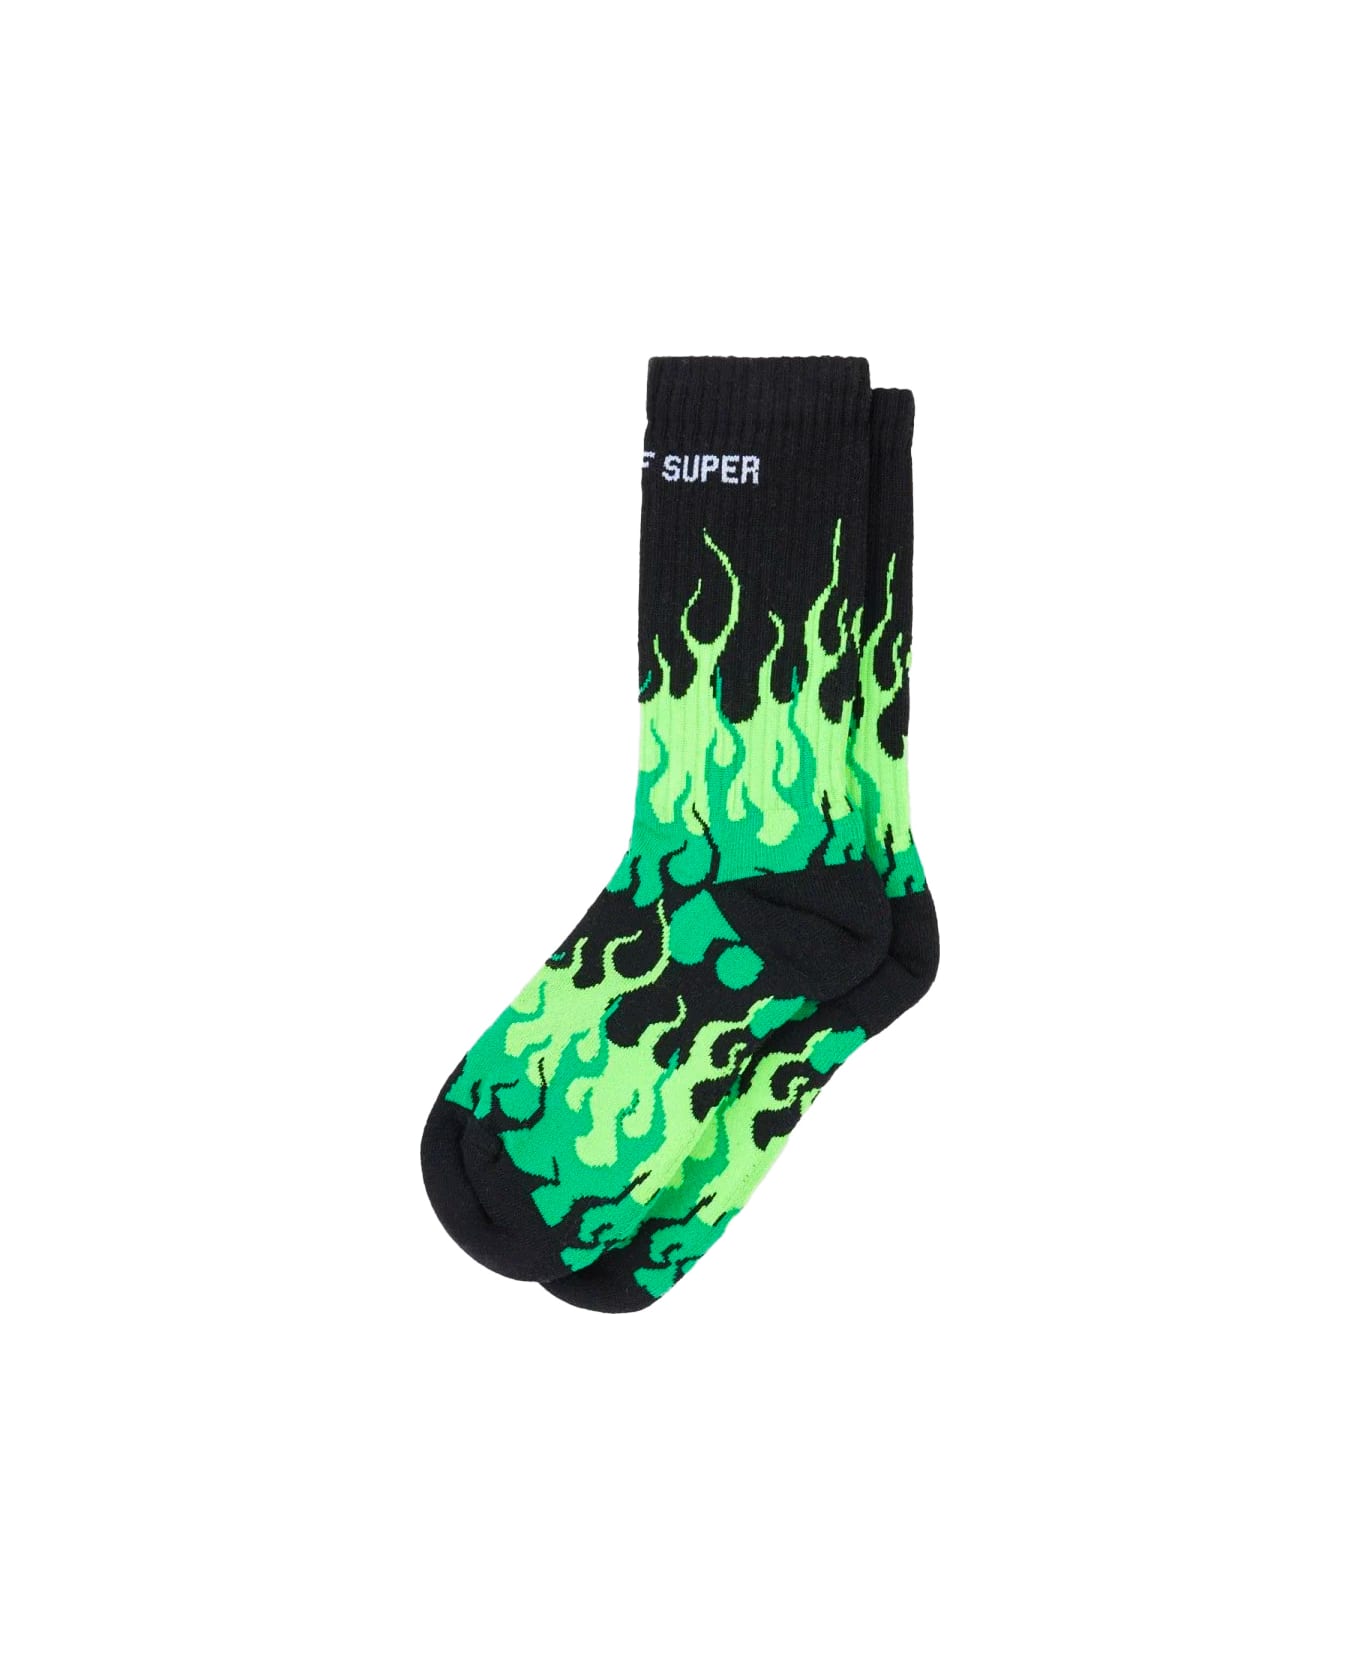 Vision of Super Black Socks With Triple Green Flame - Black